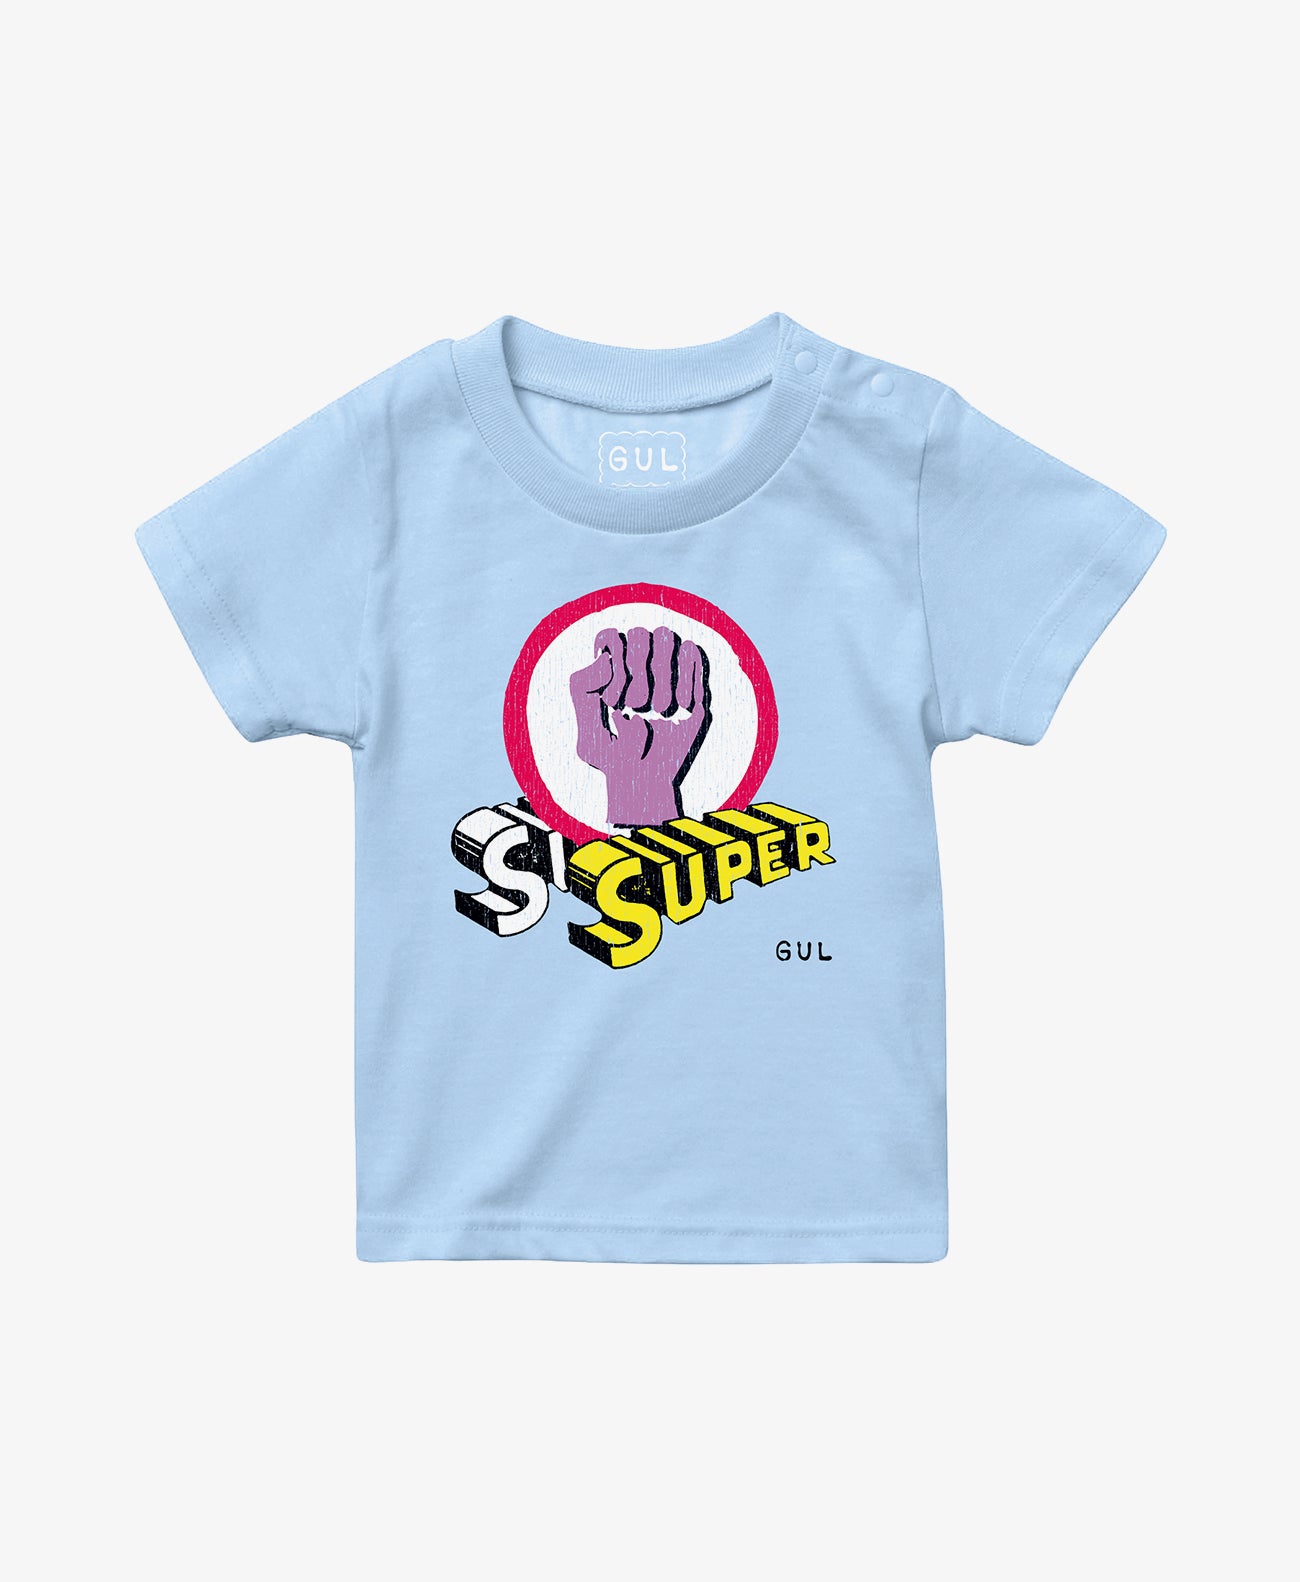 “Make it all Super!” T-shirt